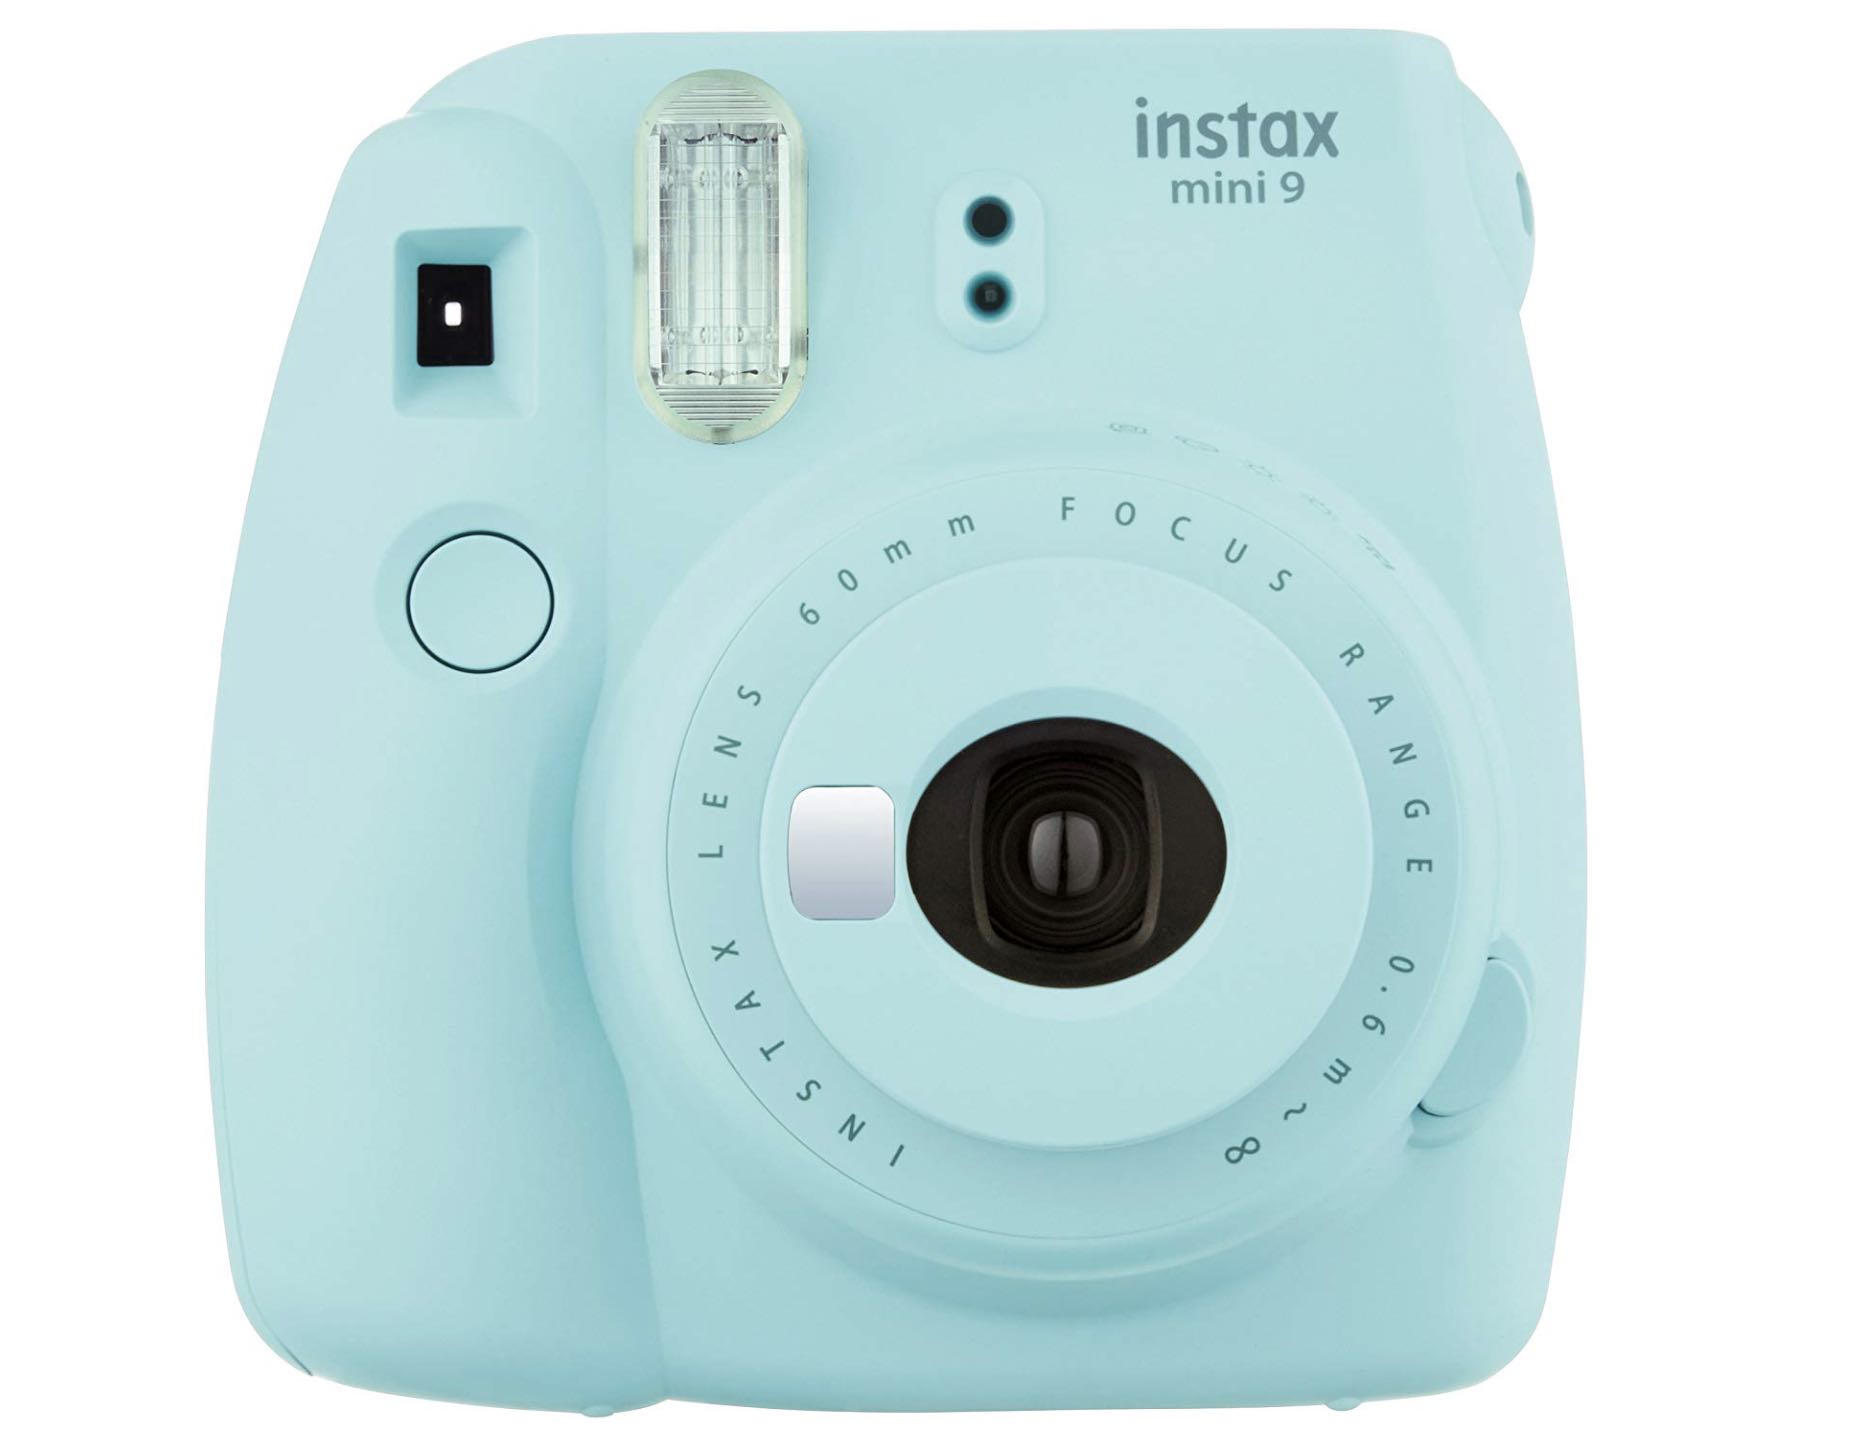 Polaroid Instant Camera - Festival Gadgets